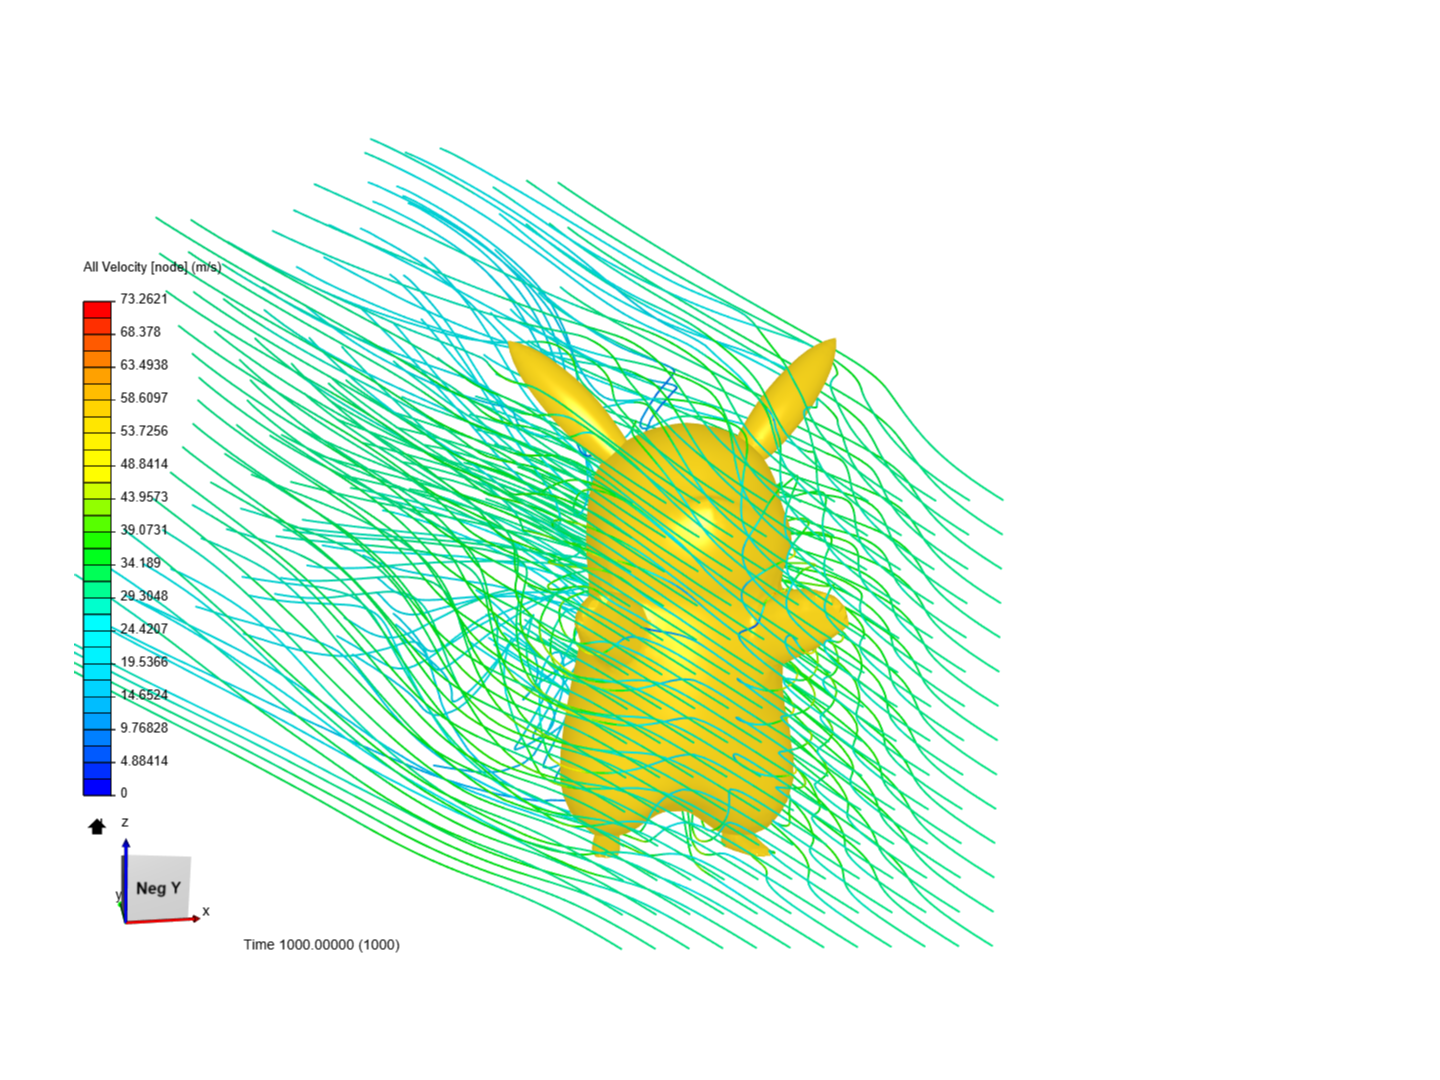 Pikachu test1 image